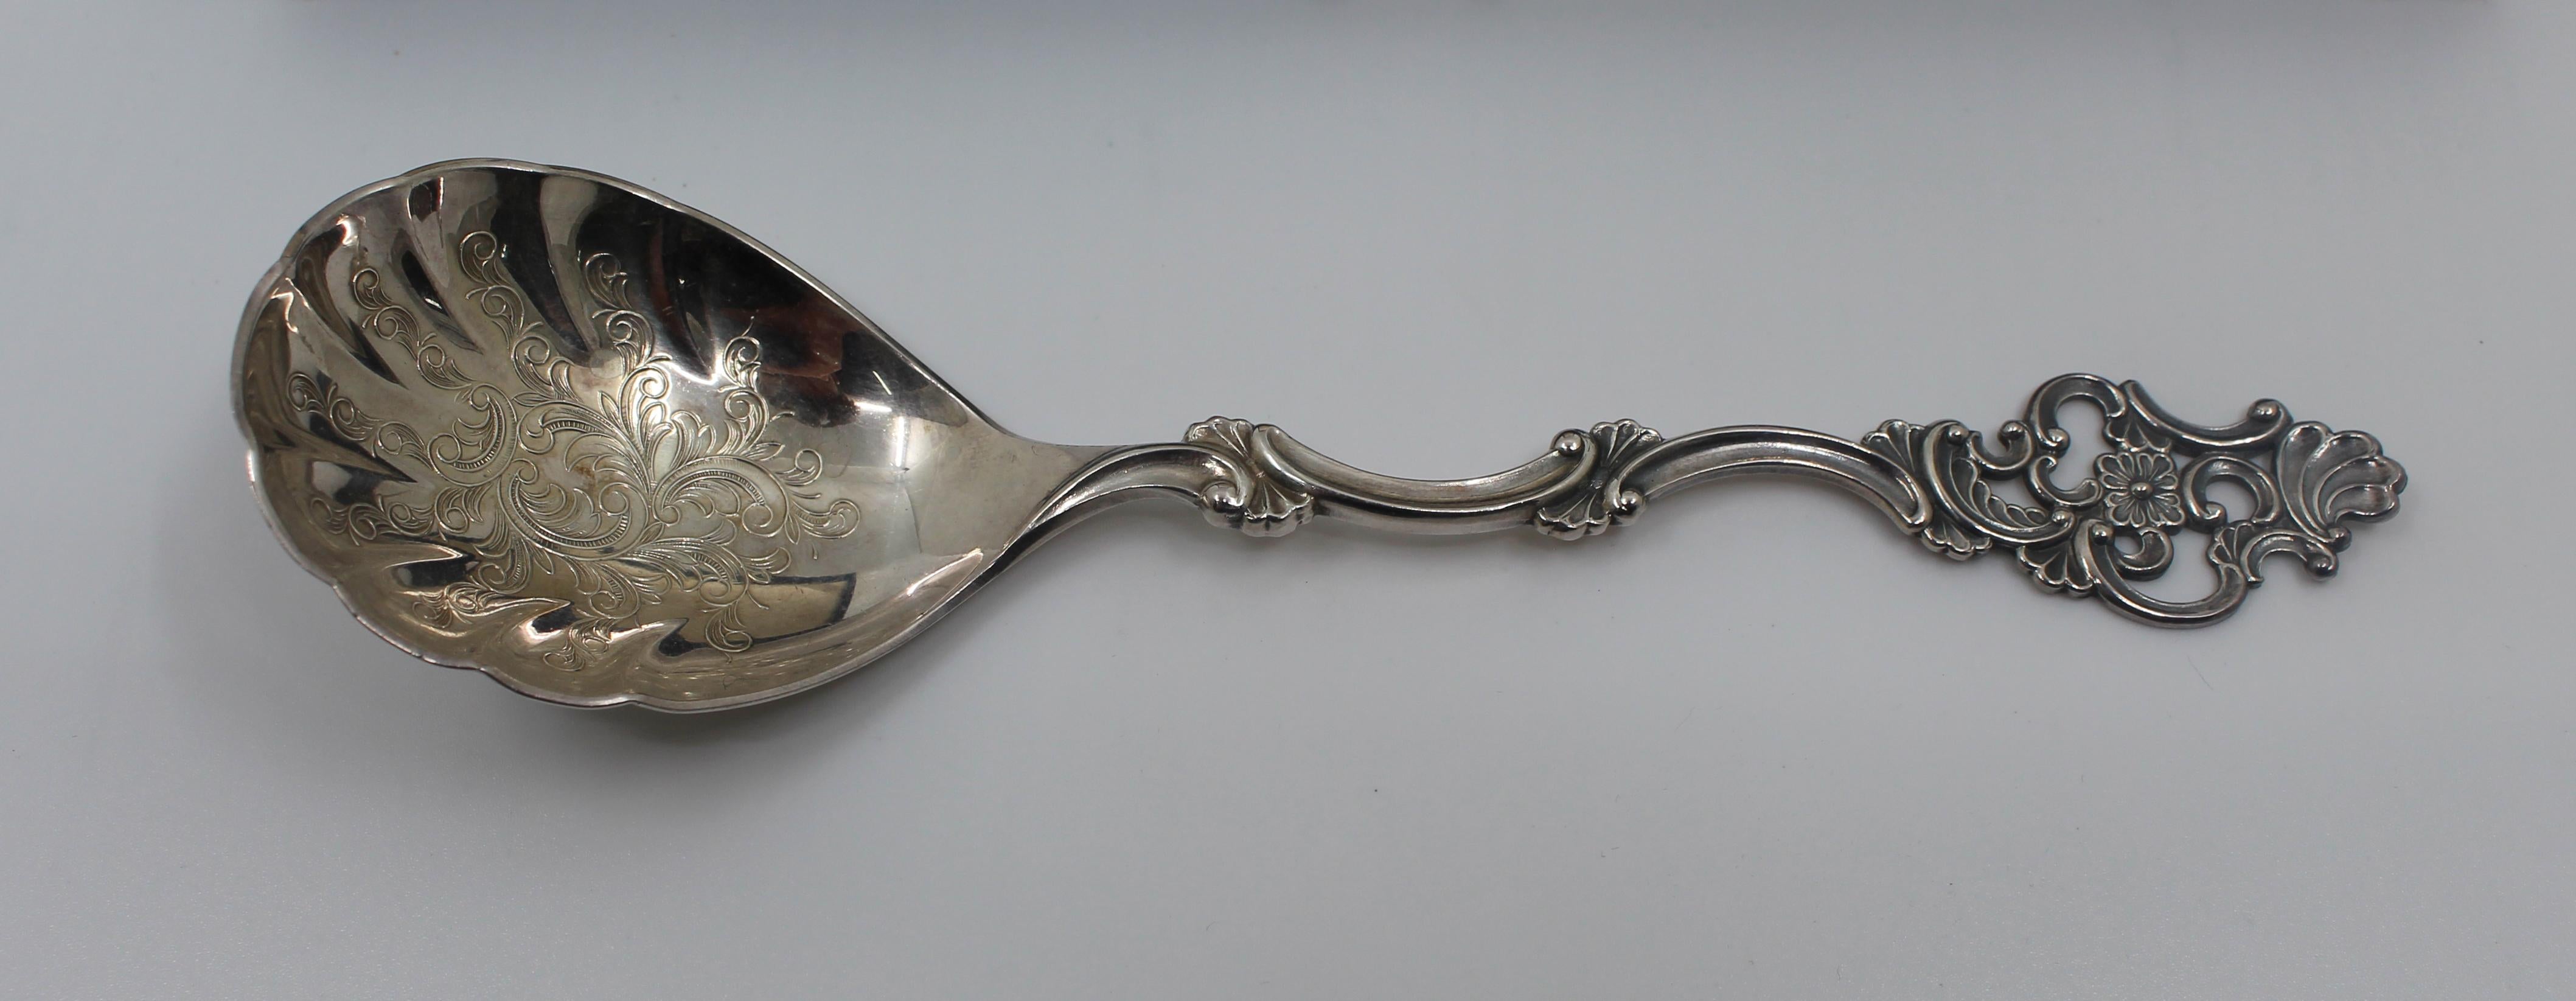 Early 20th c. Norwegian Silver Spoons by Thorvald Marthinsen Sølvvarefabrik For Sale 2